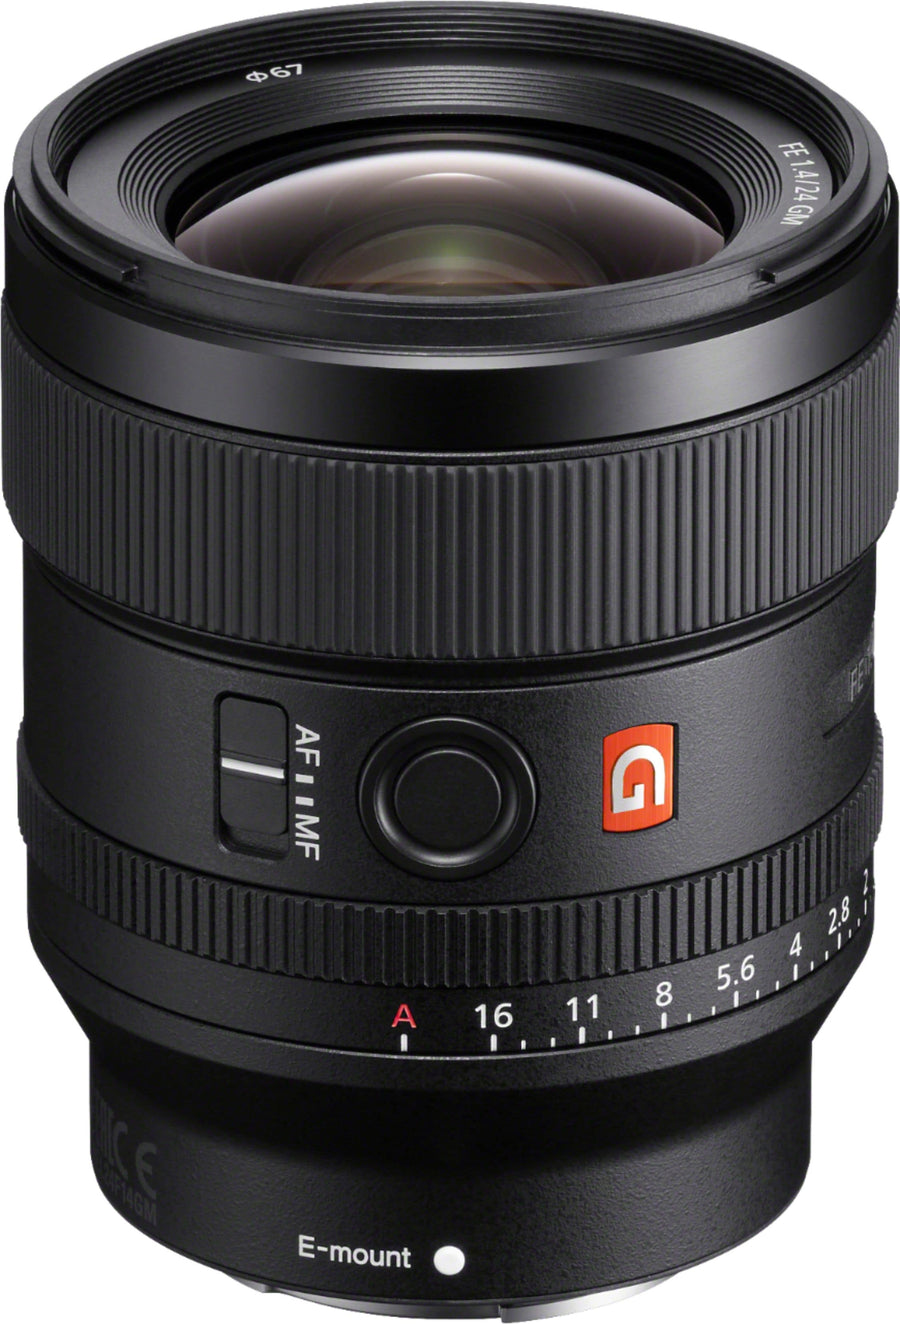 Sony - G Master FE 24mm F1.4 GM Wide Angle Prime Lens for E-mount Cameras - Black_0